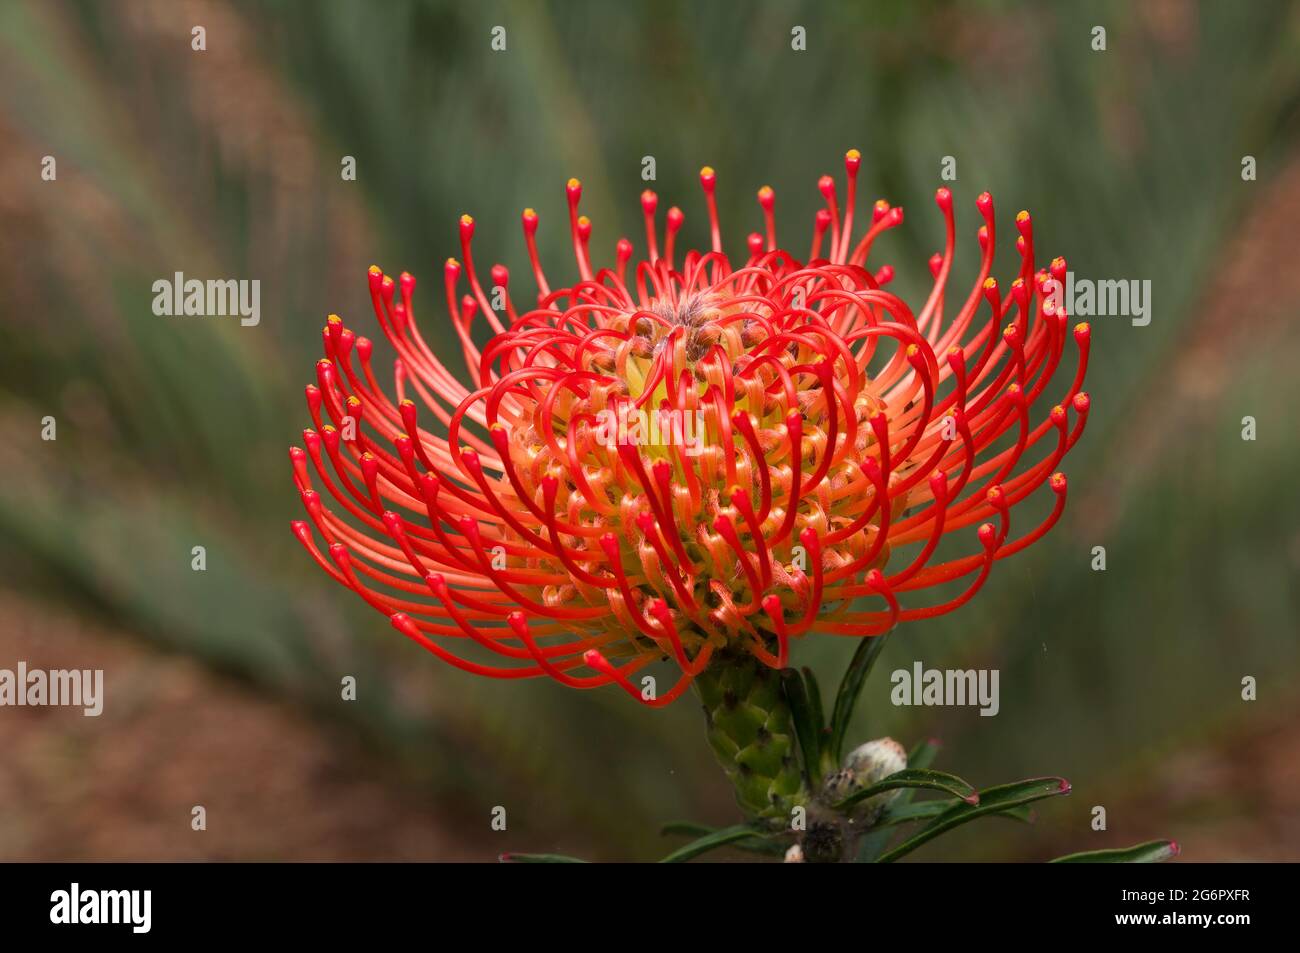 Sydney Australia, bright red flowerhead of a Leucospermum x lineare shrub Stock Photo